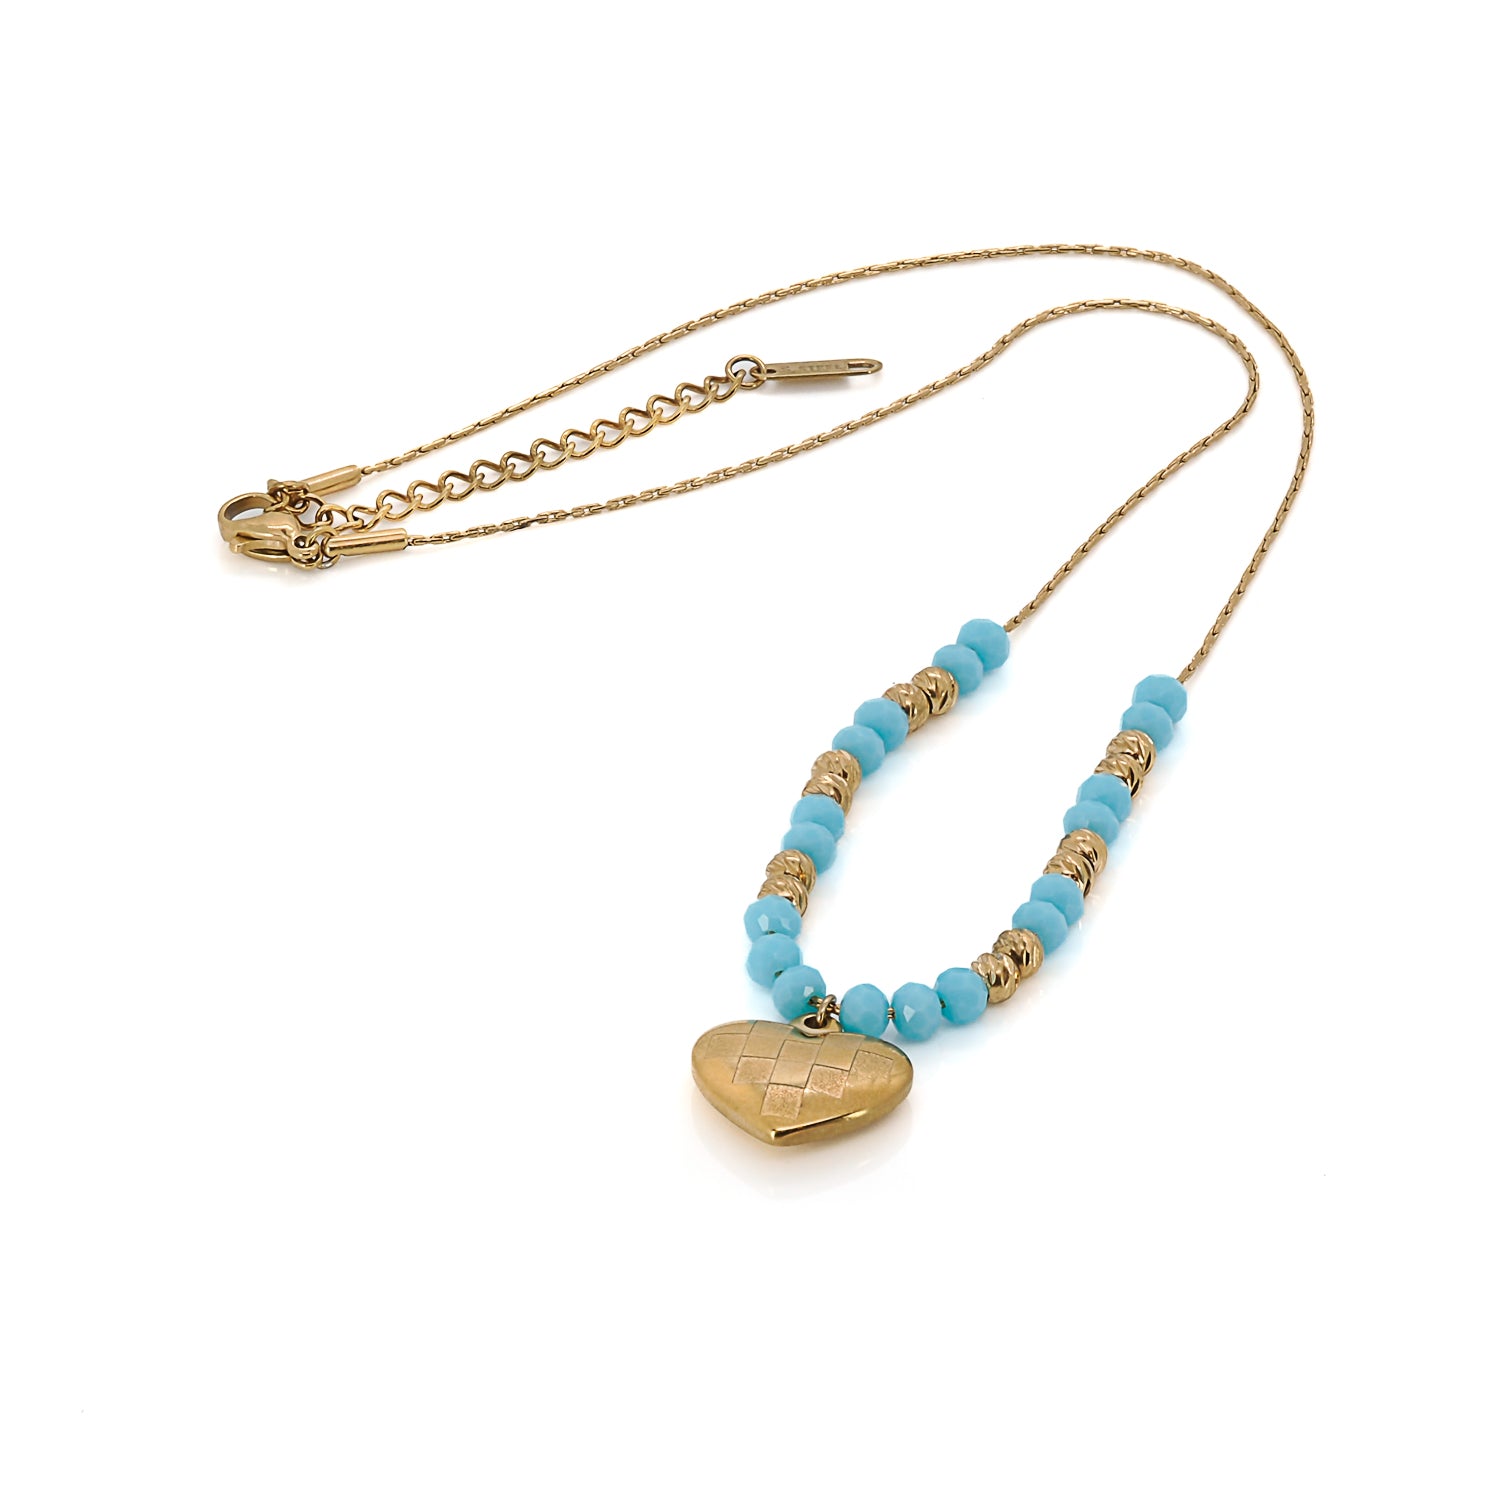 Symbolic Heart Pendant - Handmade Blue Crystal Necklace.